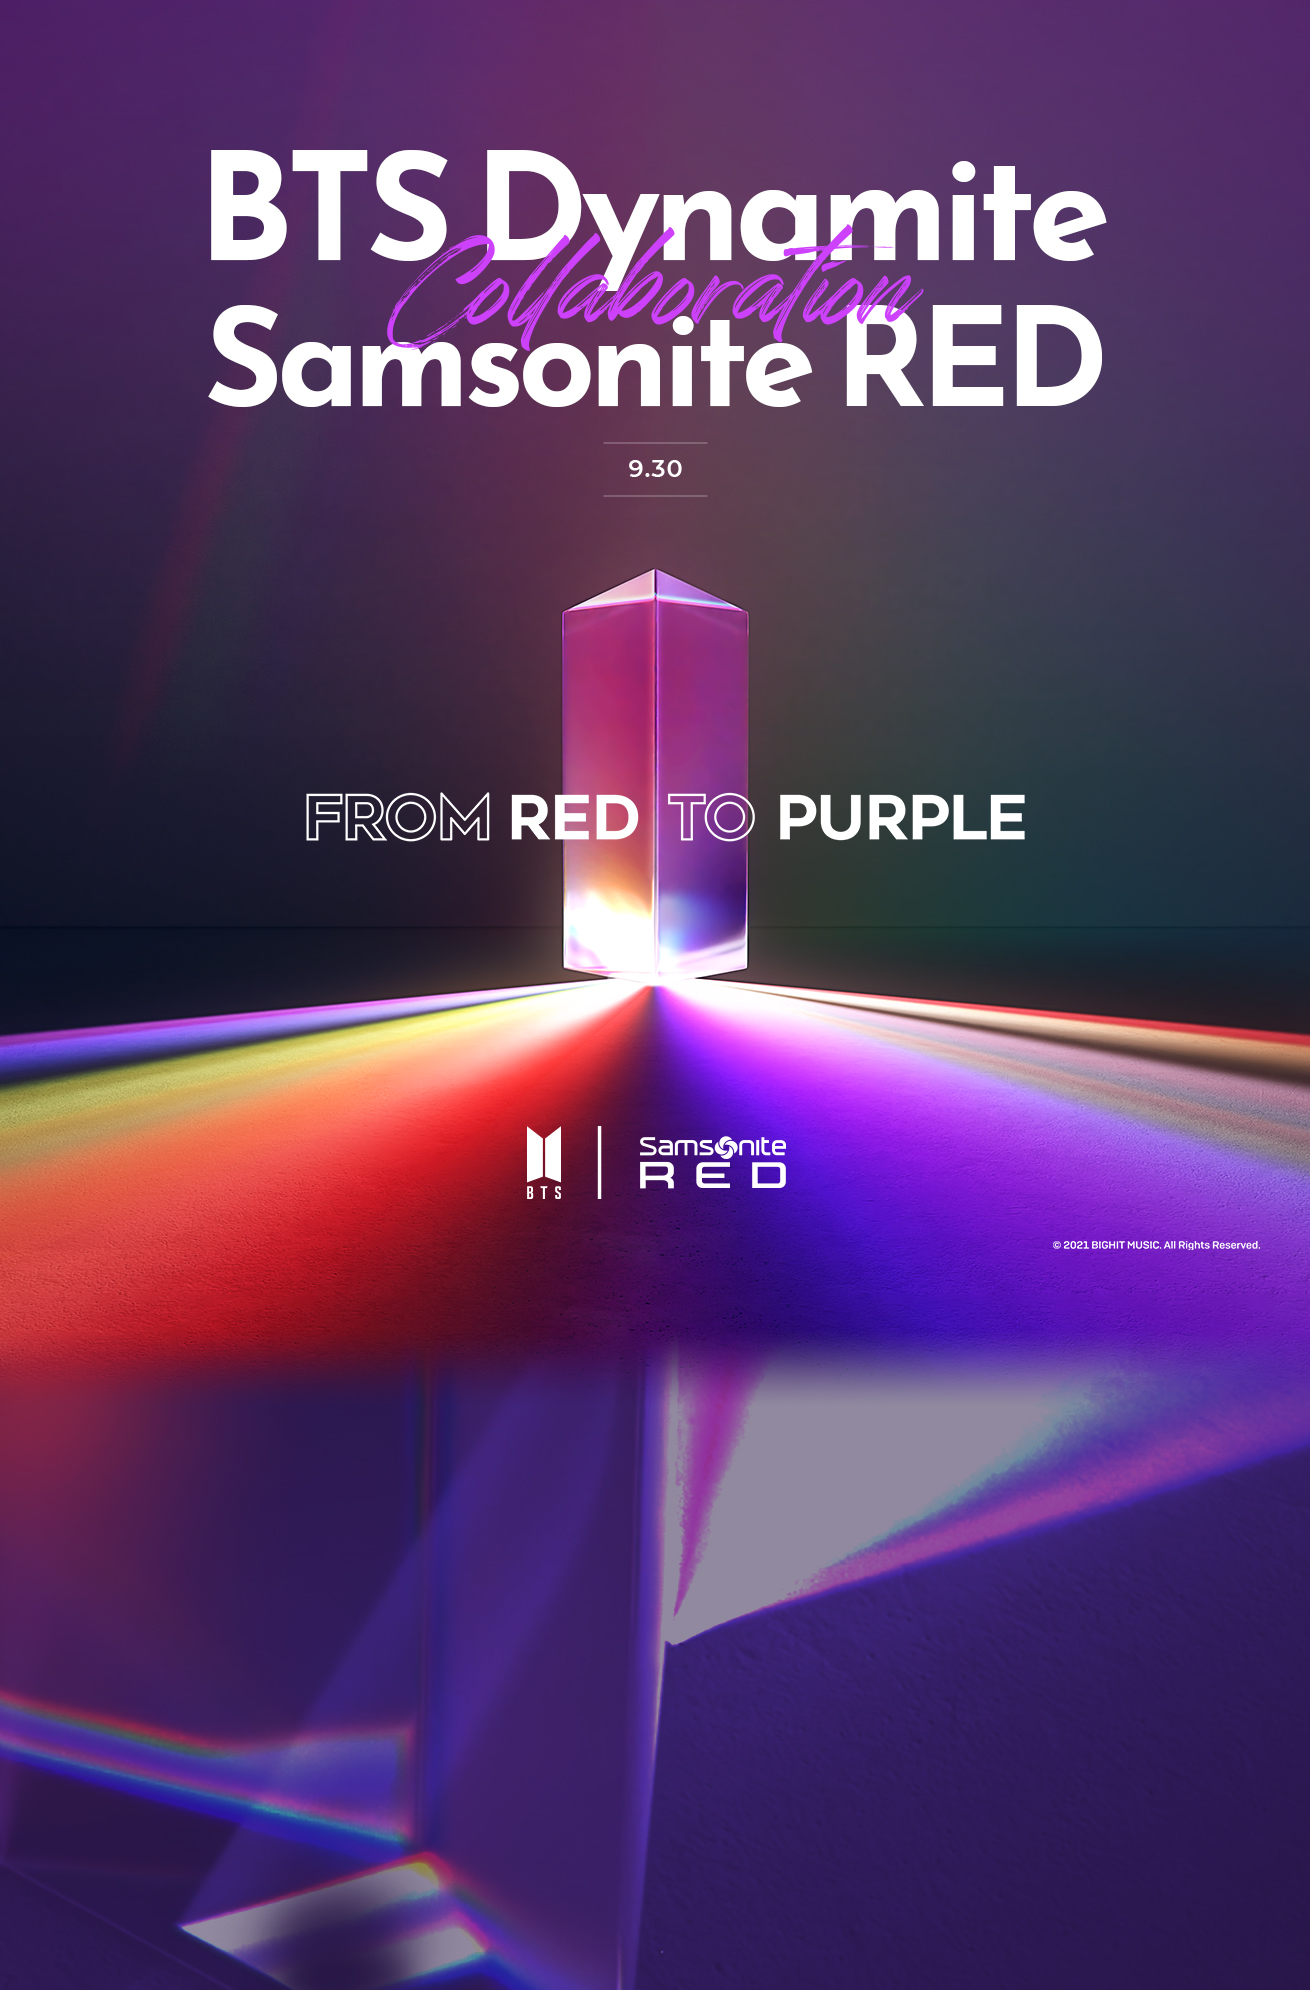 BTS Dynamite Samsonite RED